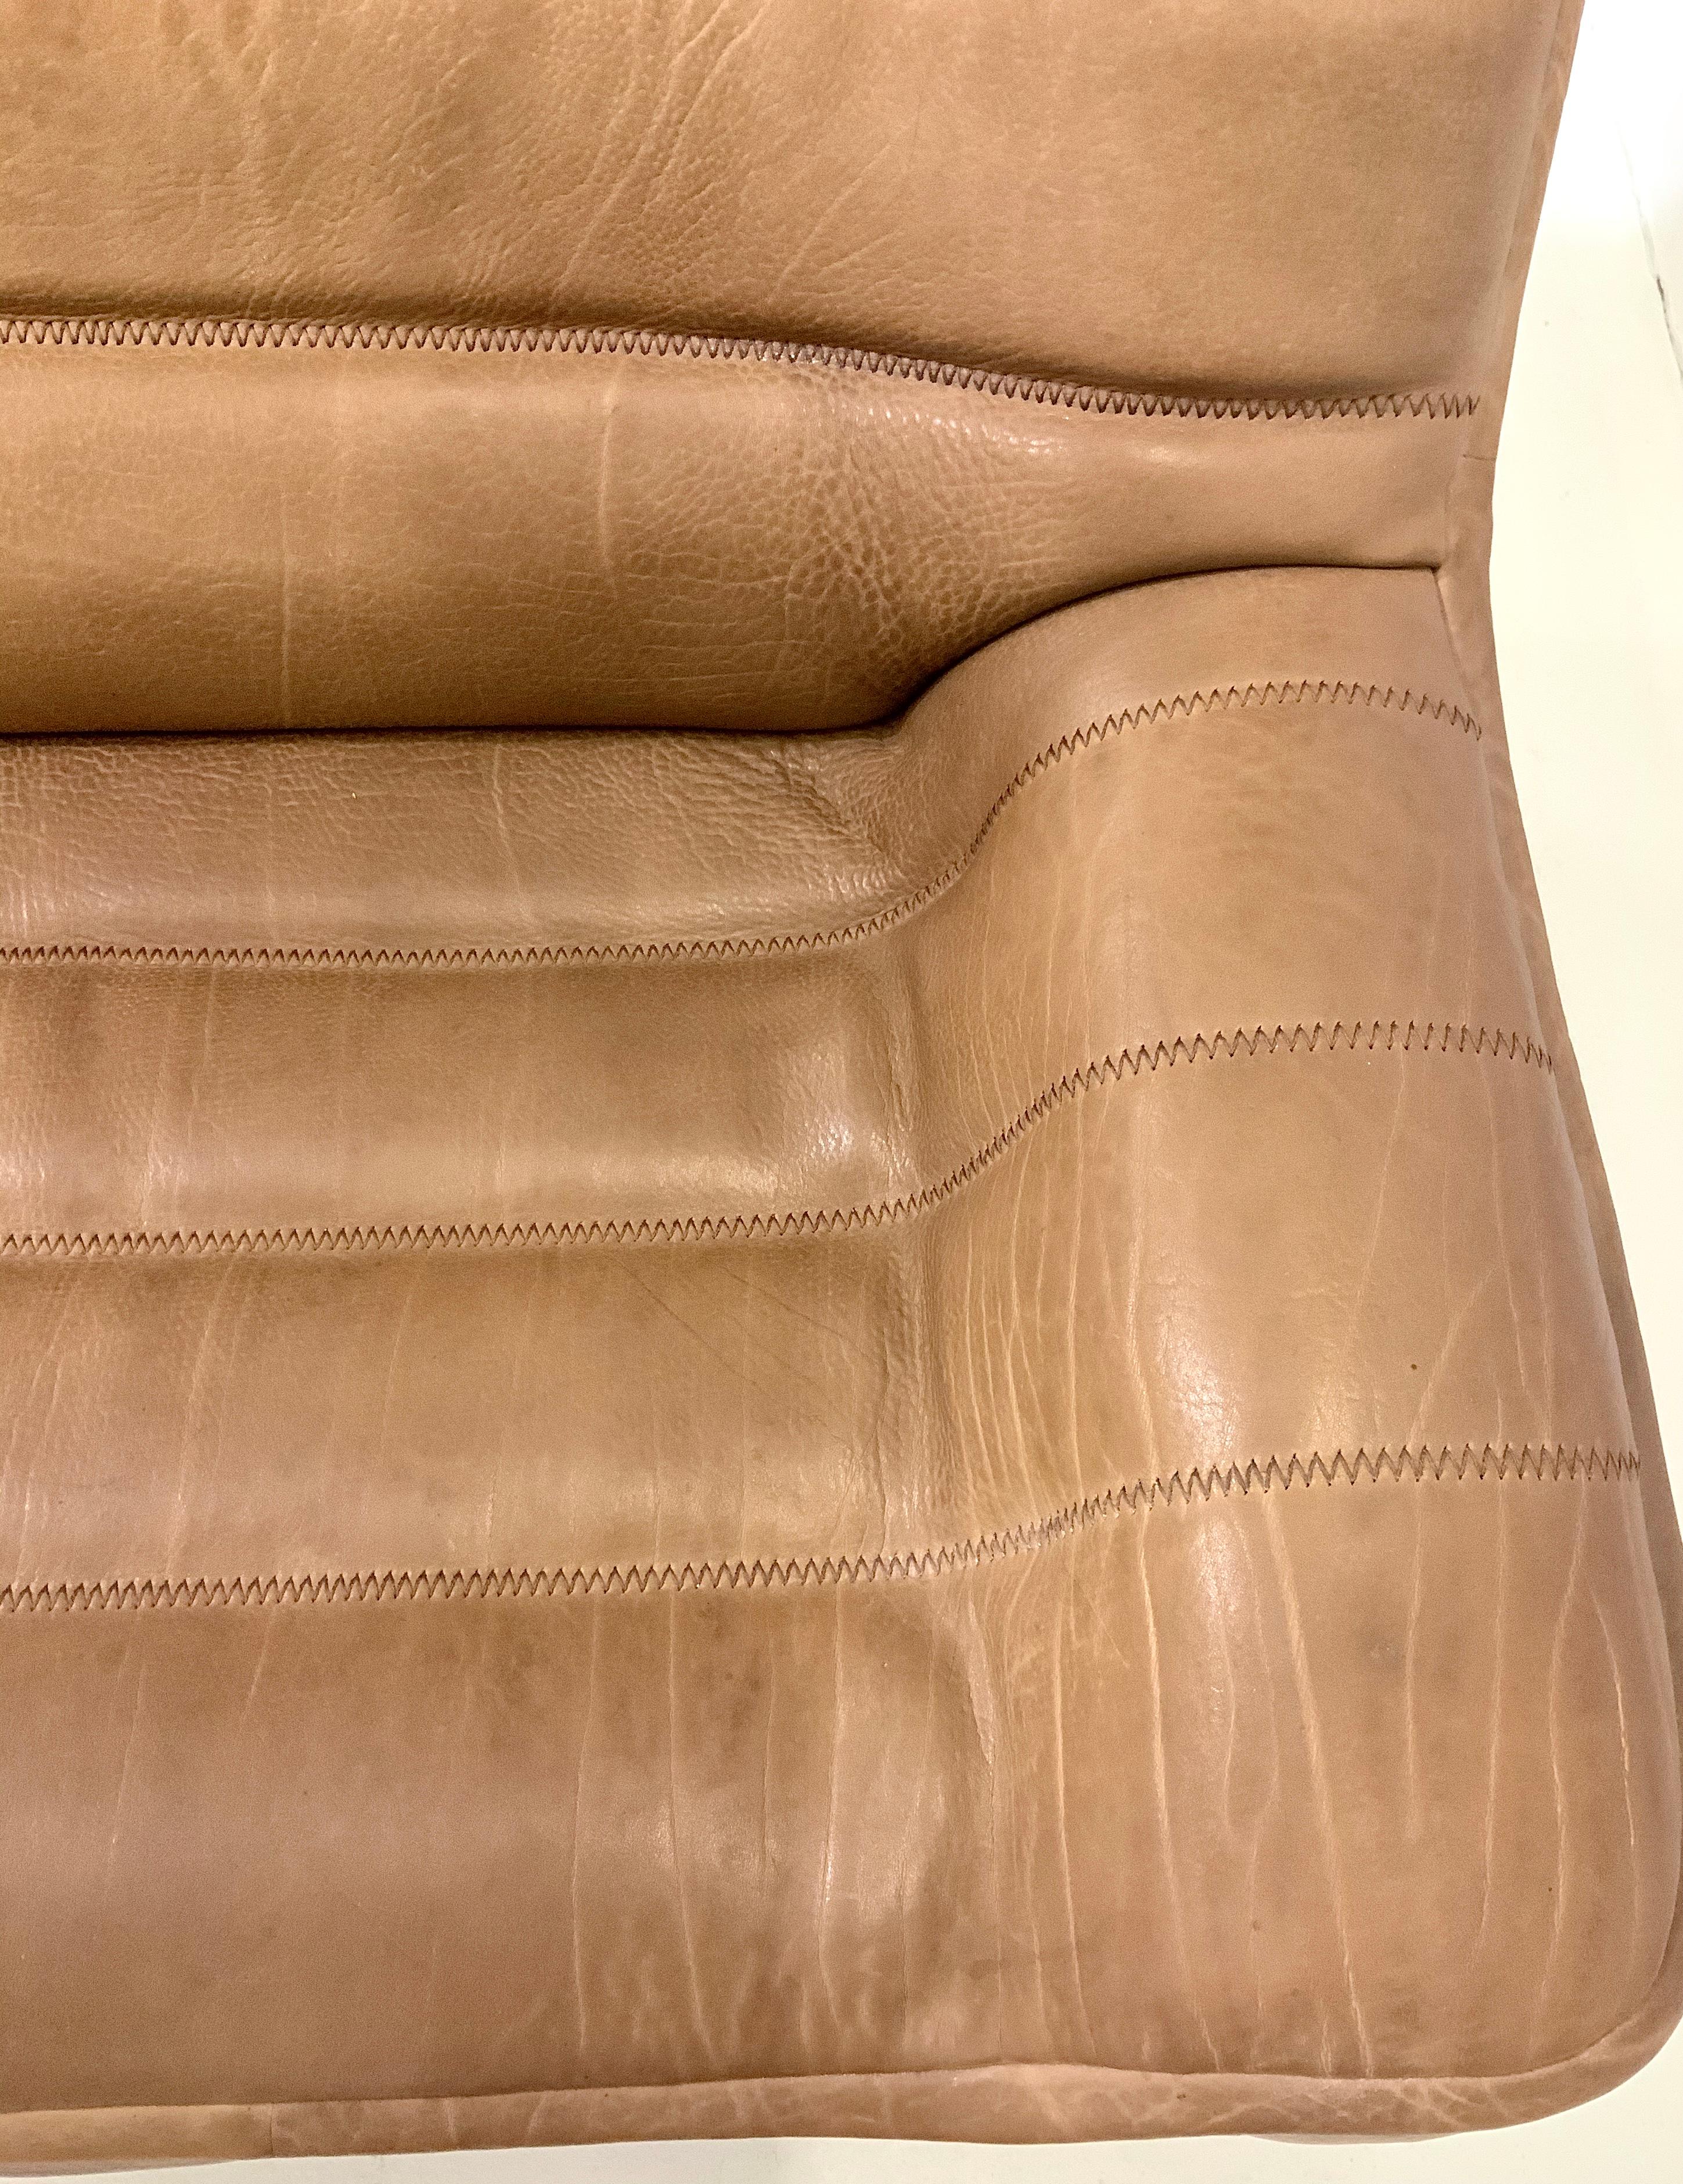 De Sede DS-84 Vintage Thick Buffalo Neck 2-Seat Leather Loveseat Sofa, 1970s 2